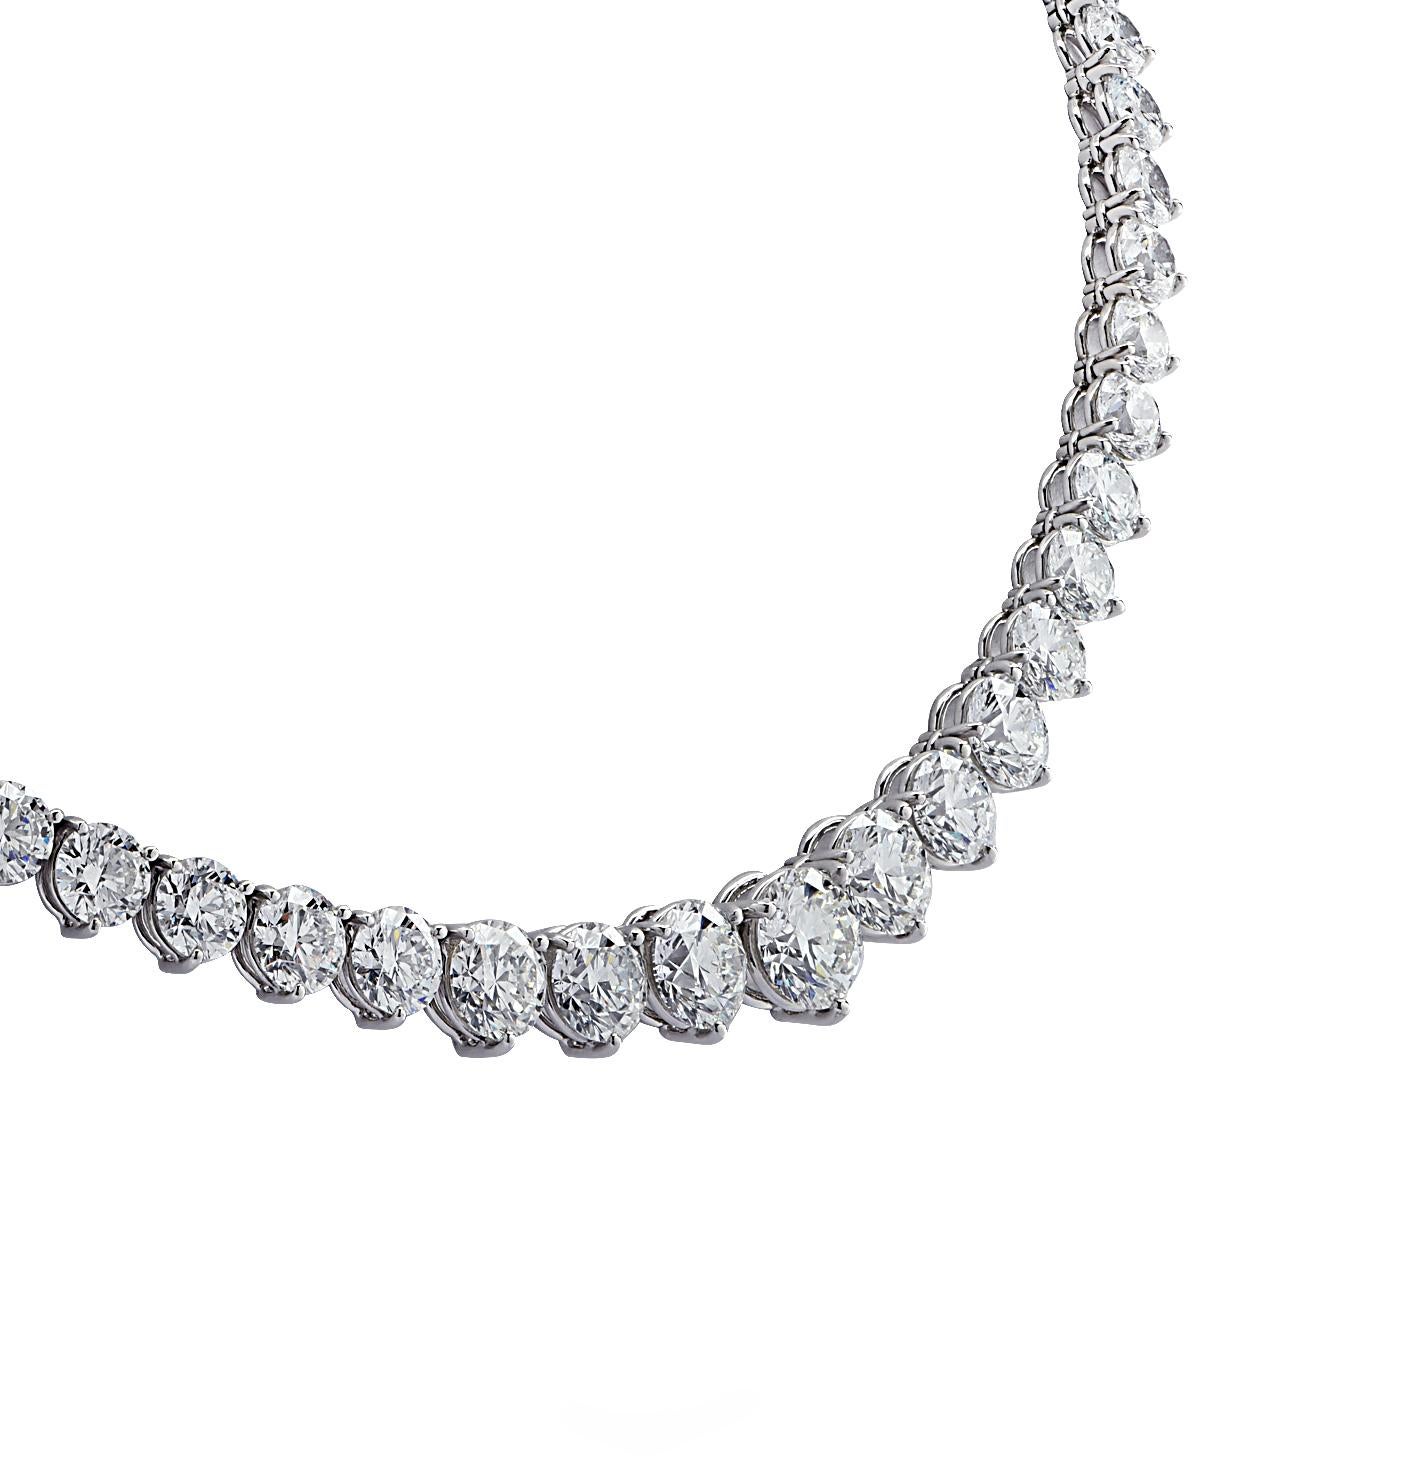 Vivid Diamonds 32 Carat Riviere Necklace For Sale 1